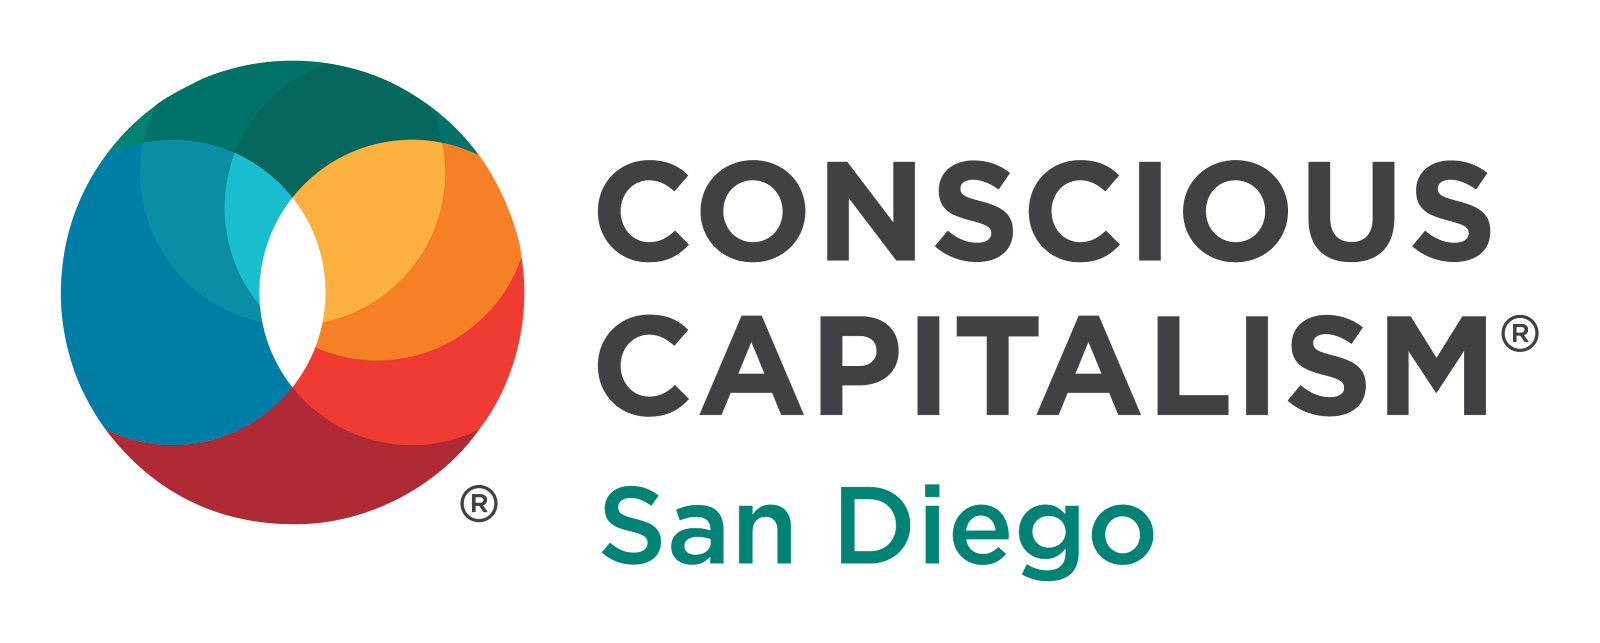 conscious capitalism san diego logo